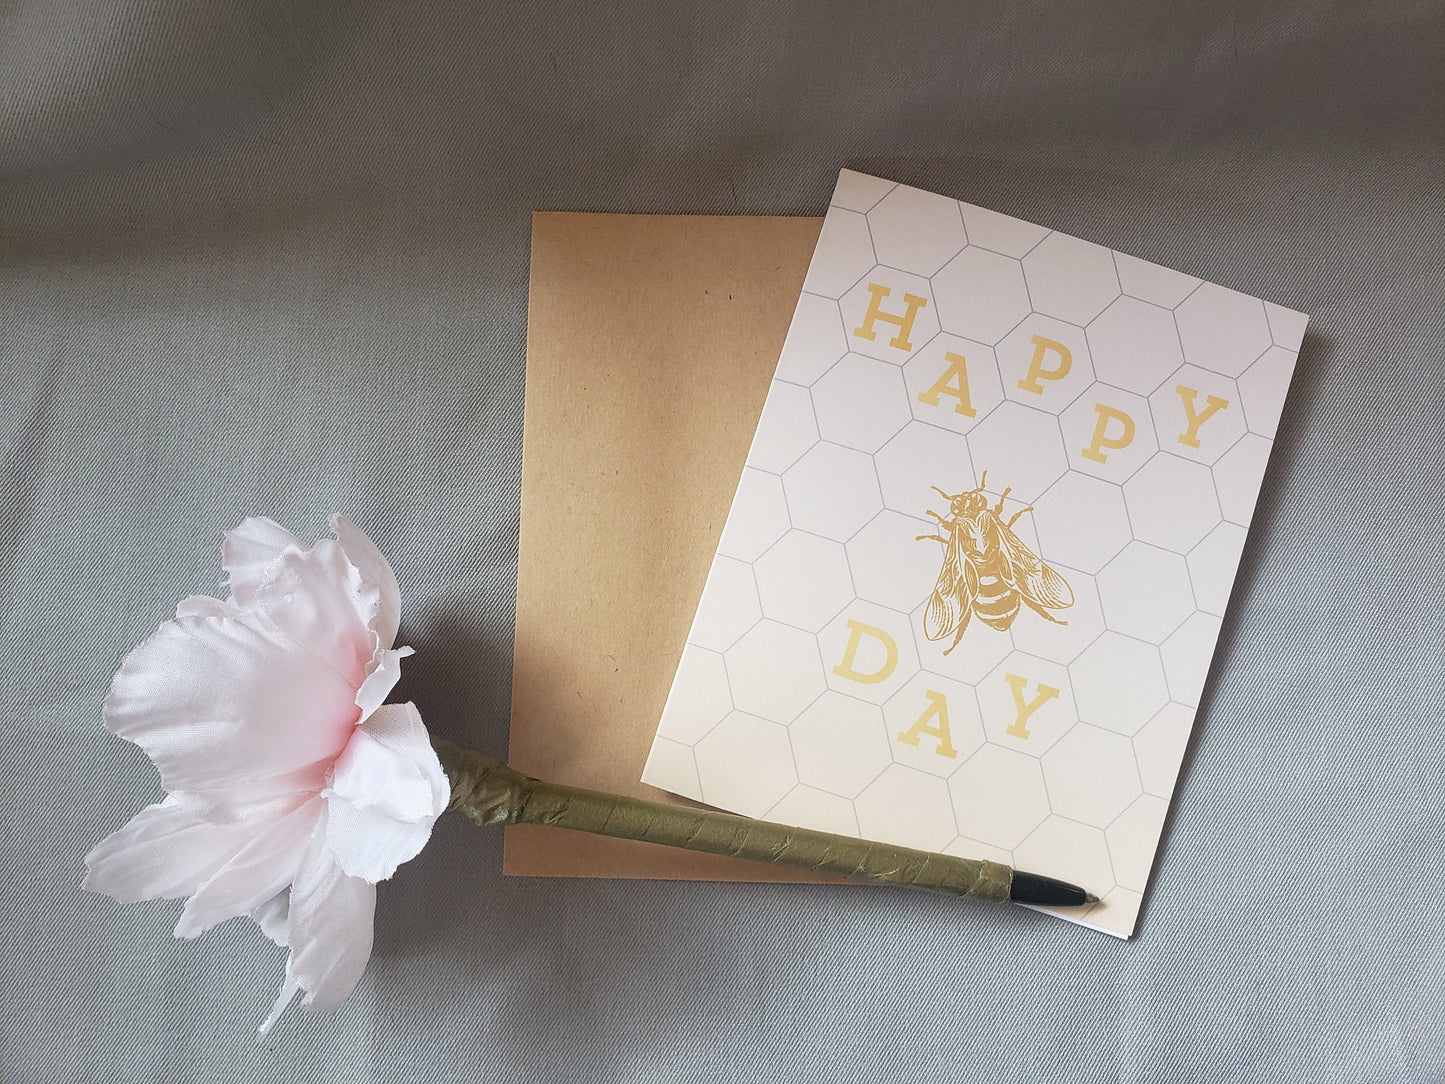 Birthday Card - Happy [BEE]day